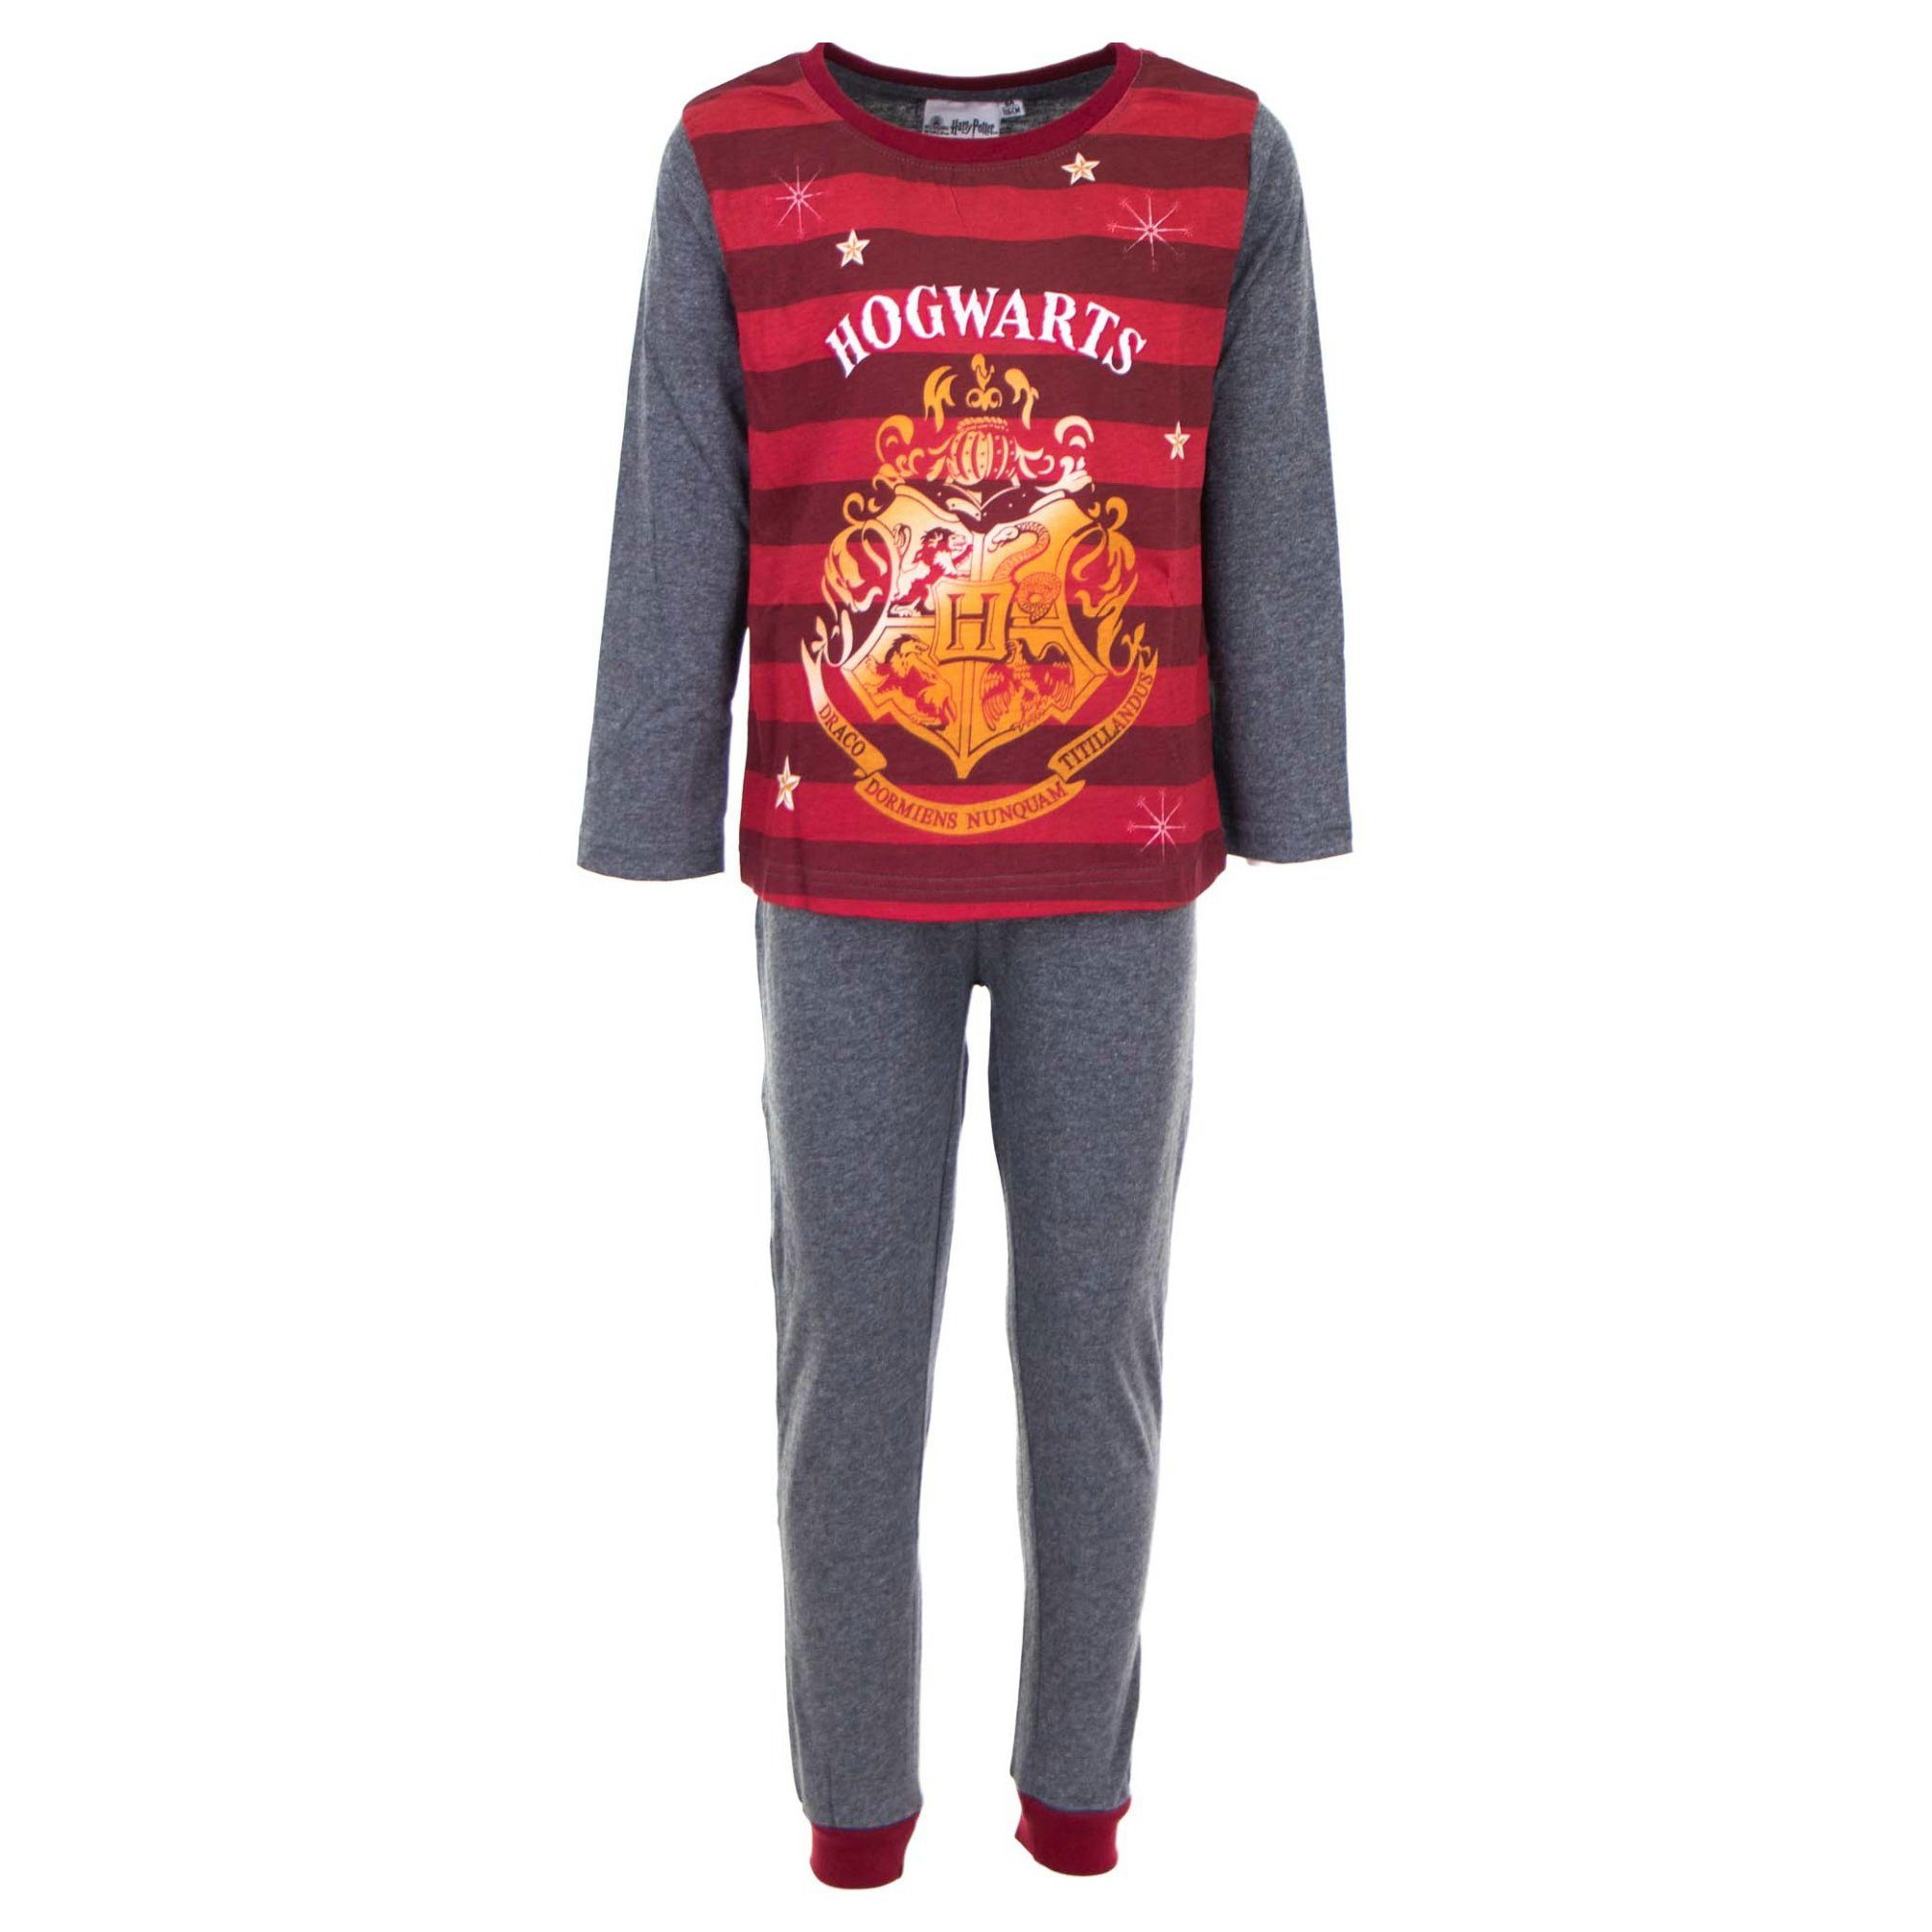 Harry Potter Schlafanzug Harry Potter Hogwarts Kinder Pyjama Gr. 98 - 128, 100% Baumwolle